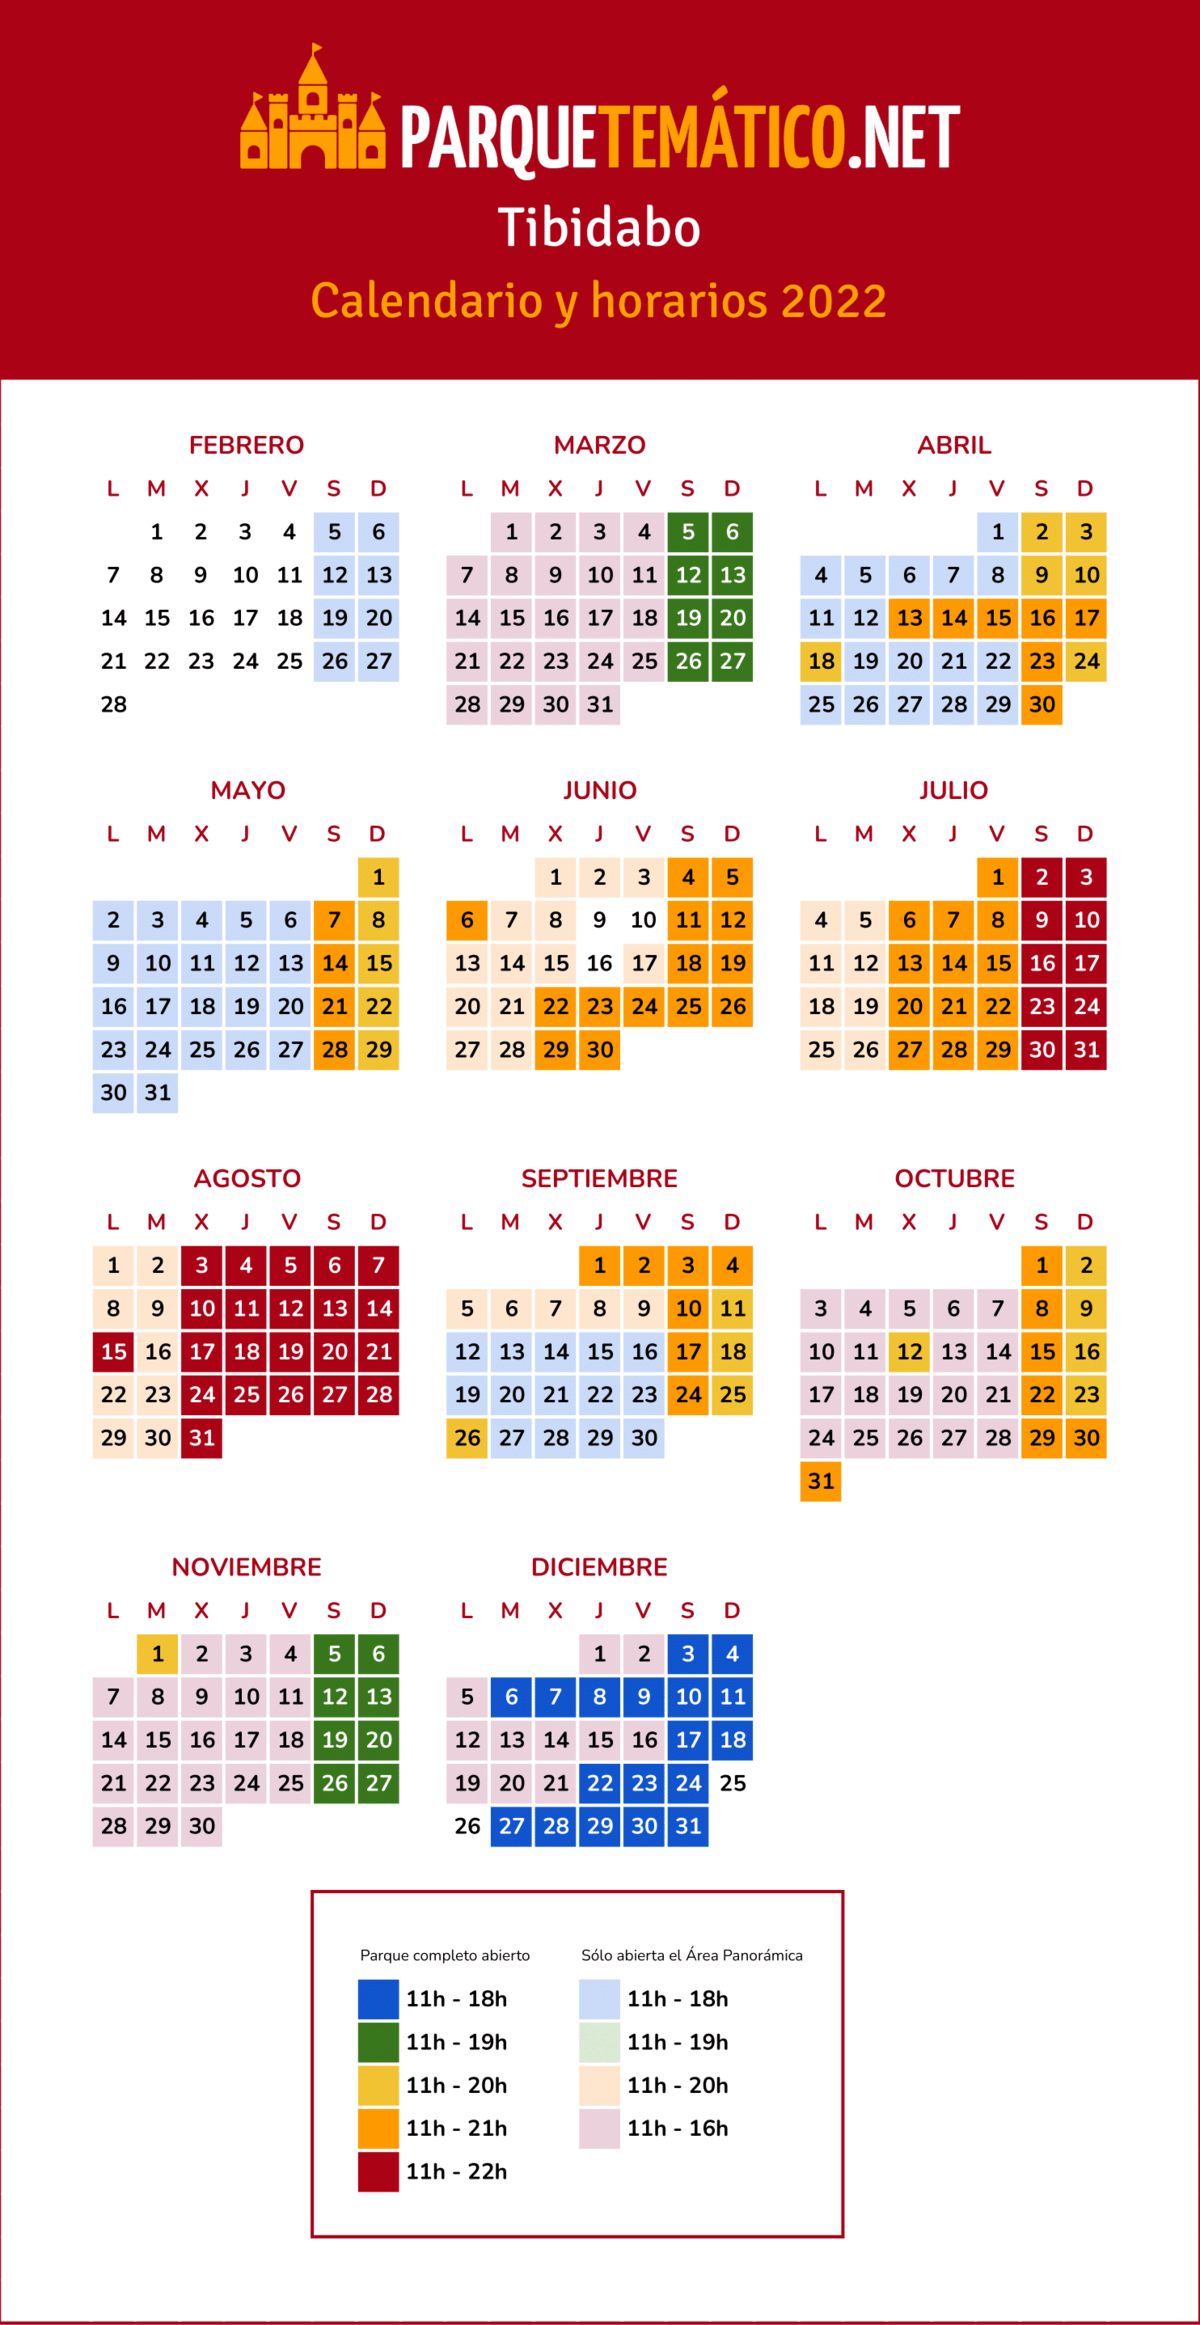 Calendario y horarios de Tibidabo 2022